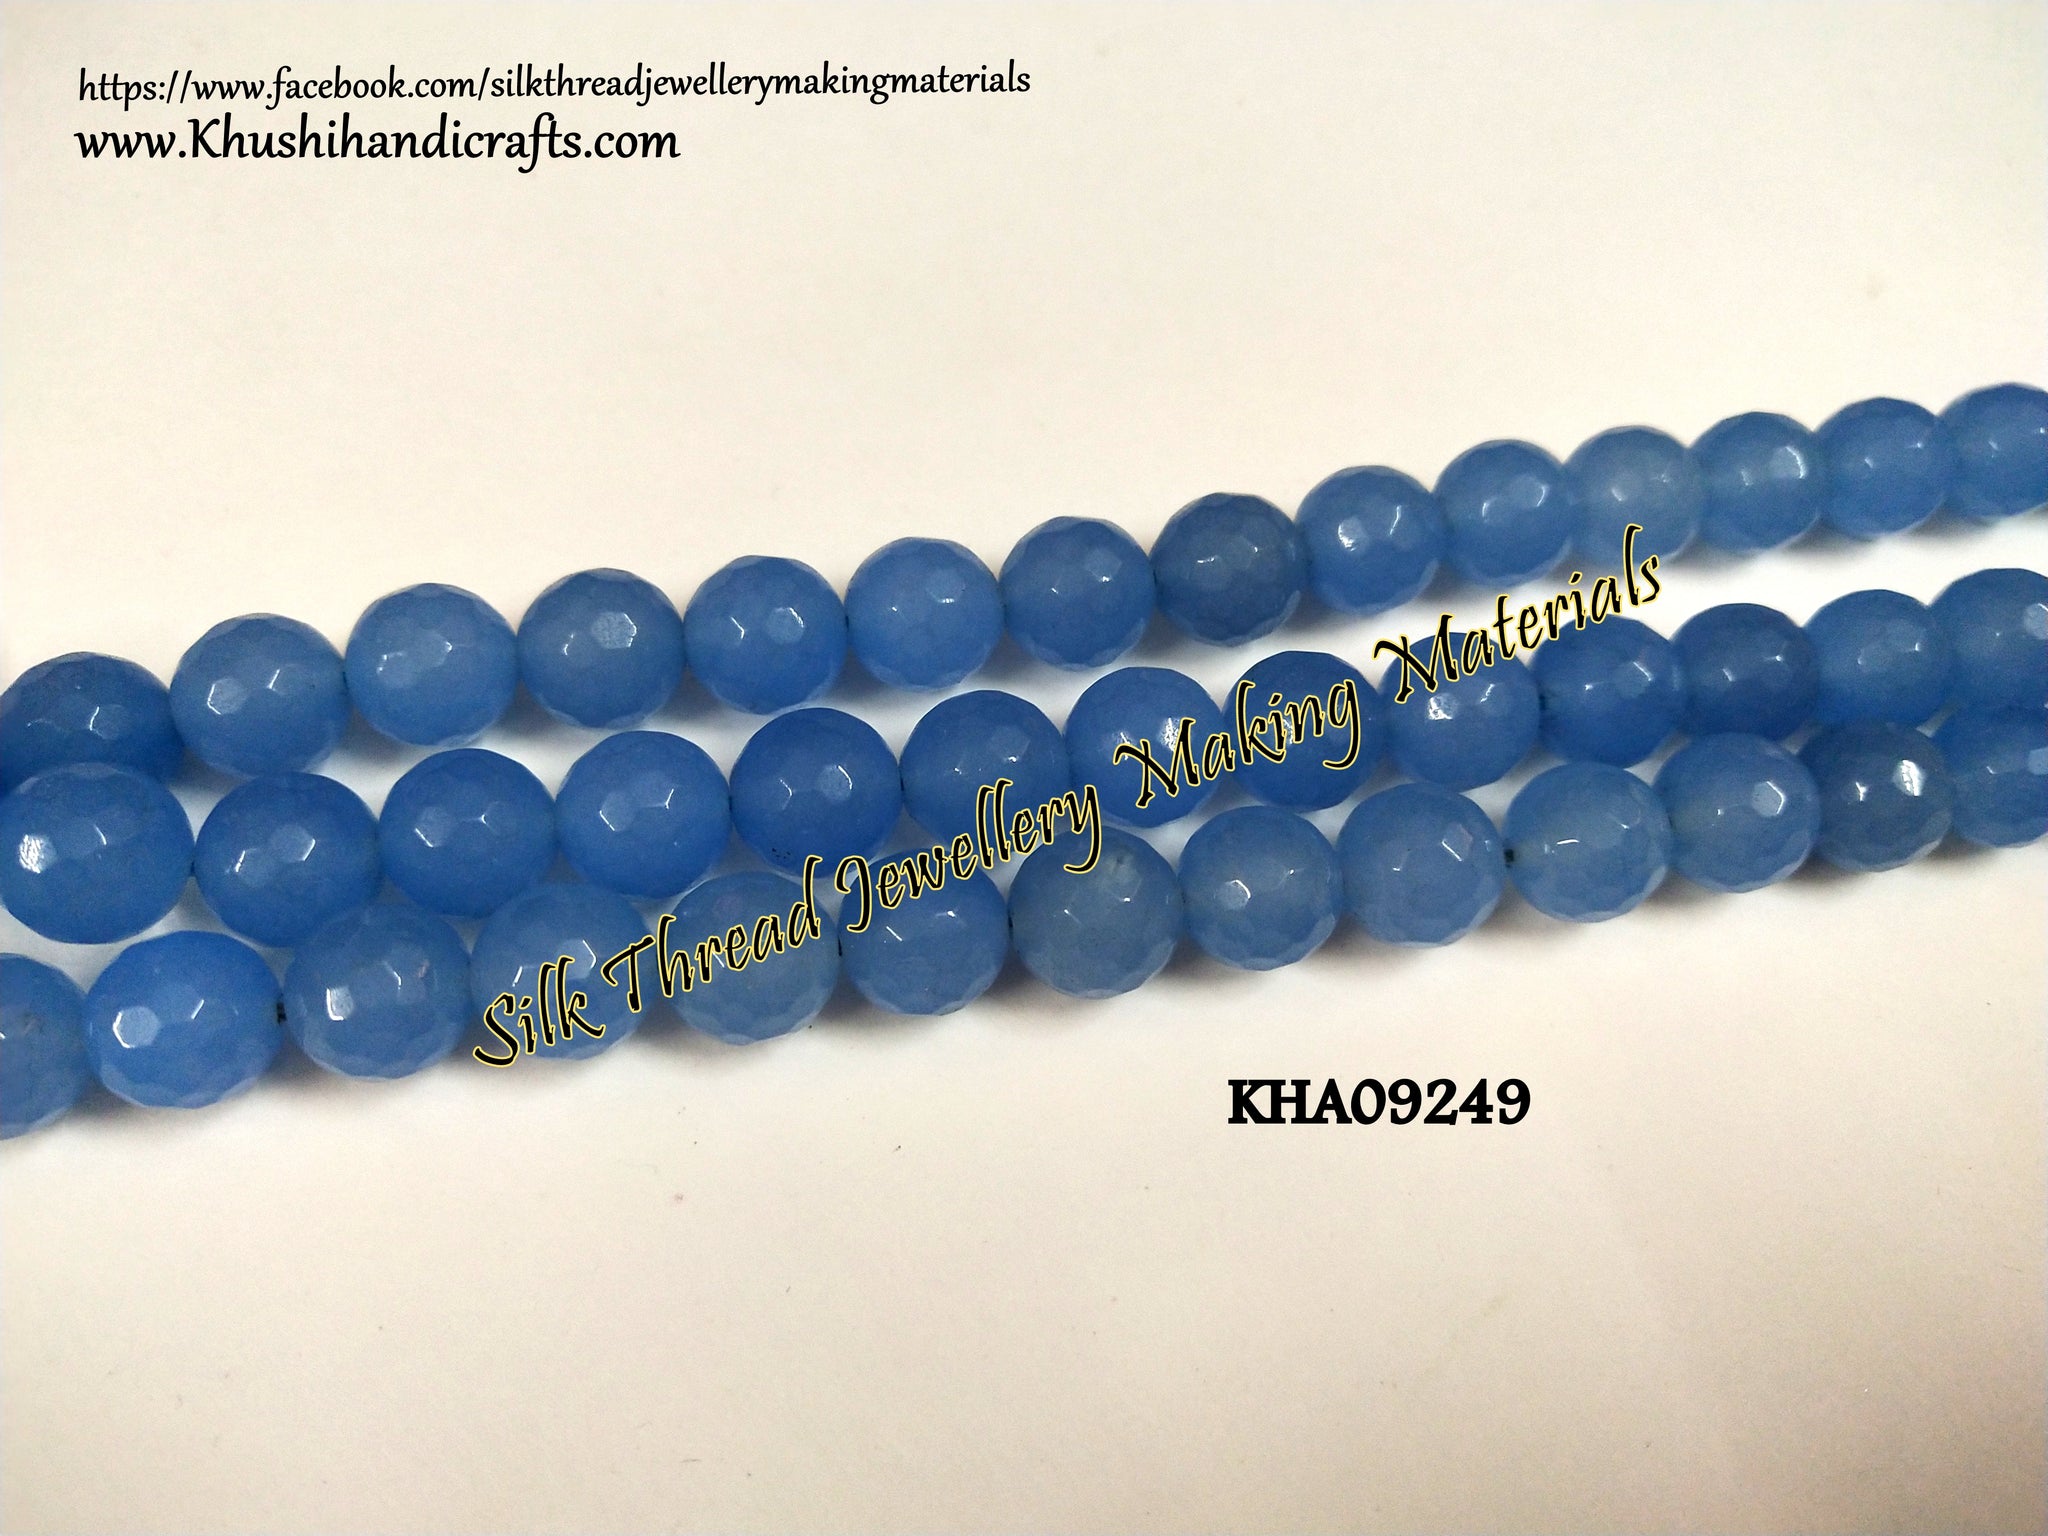 Blue semiprecious stones